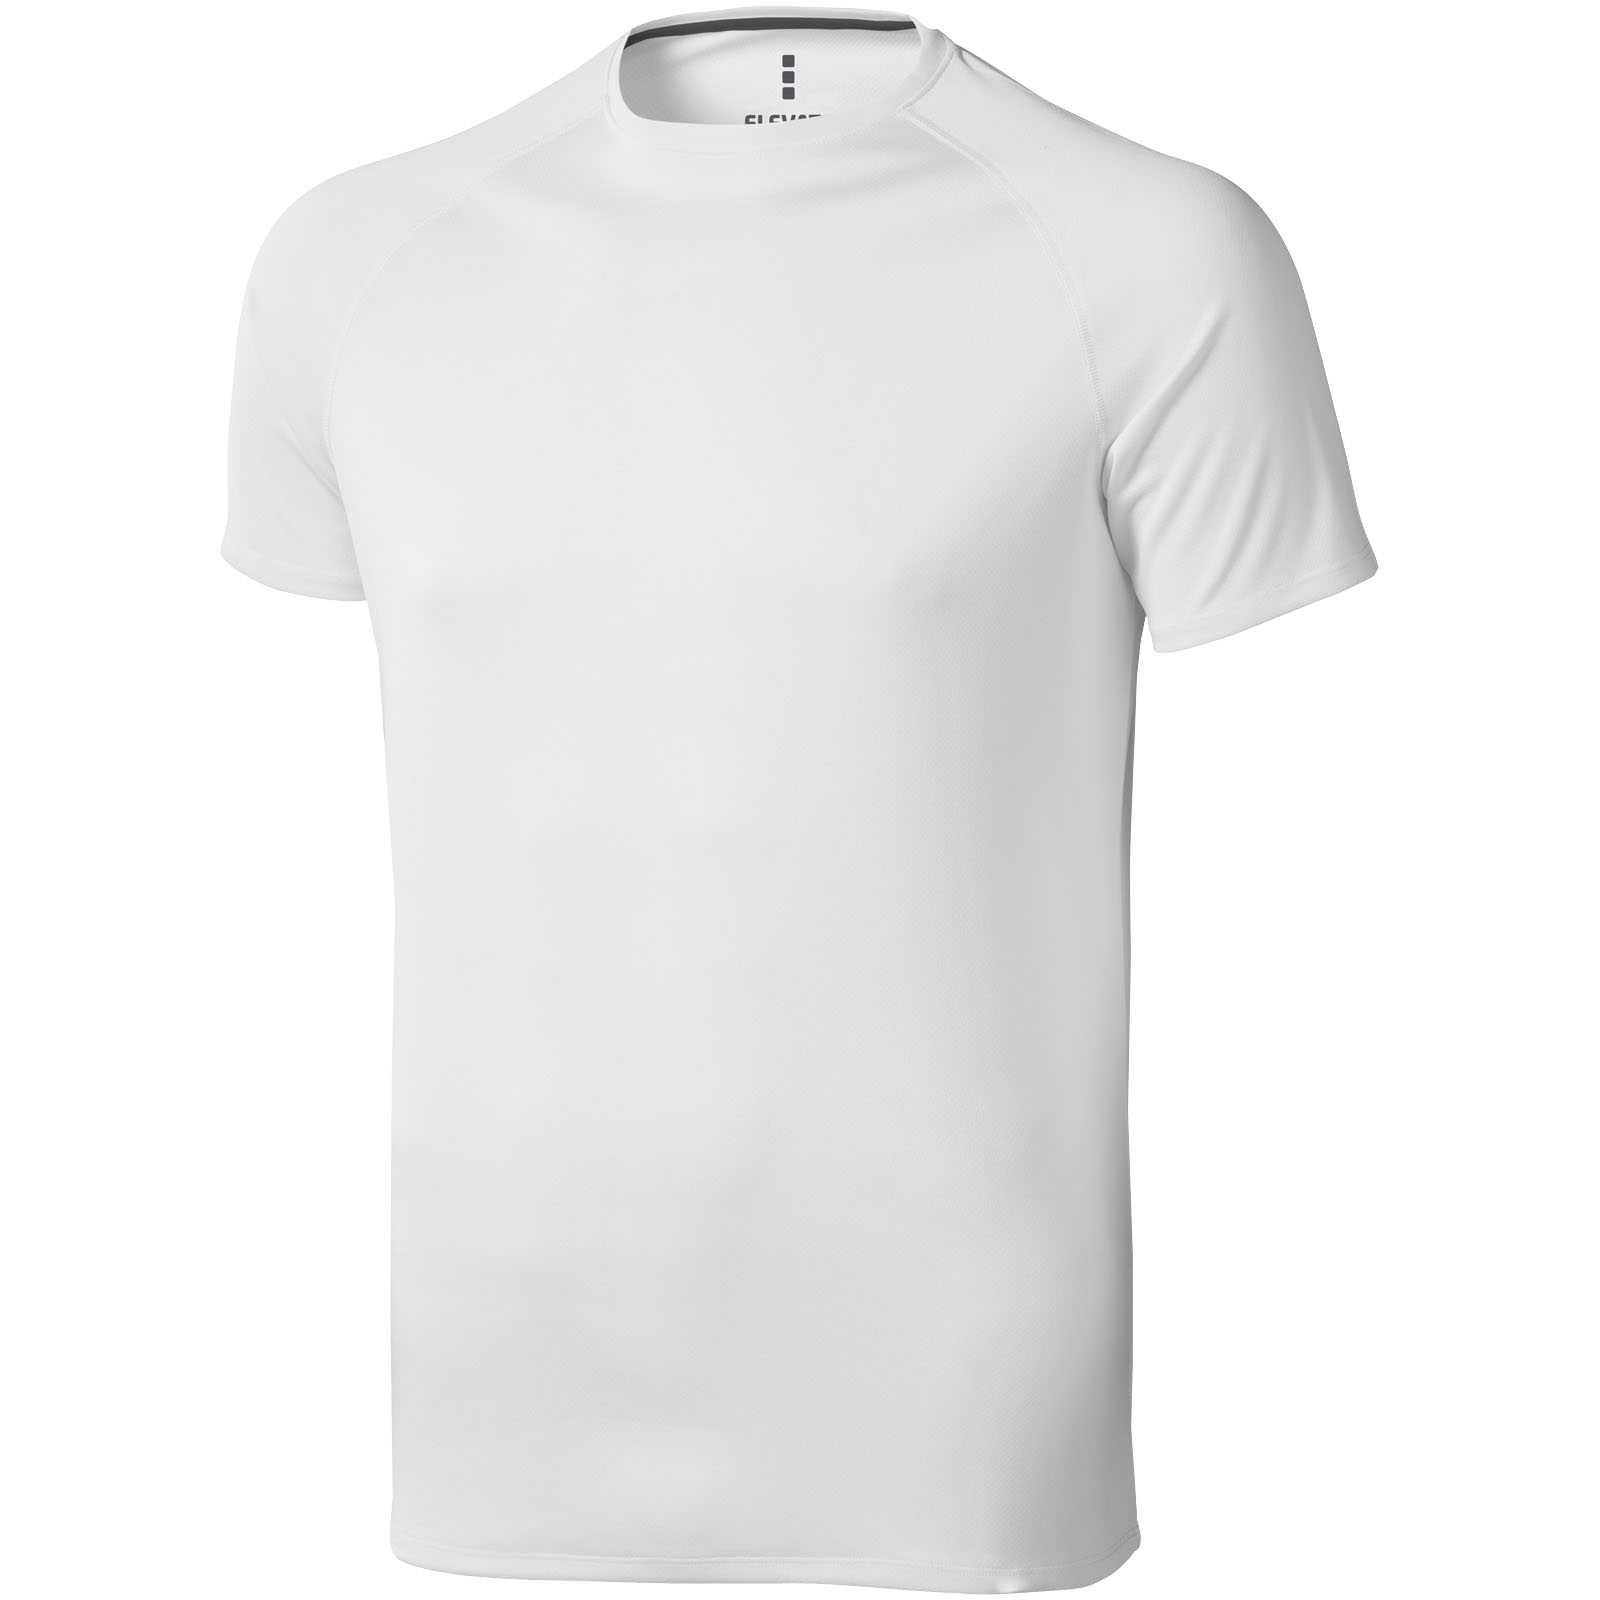 Advertising T-shirts - Niagara short sleeve men's cool fit t-shirt